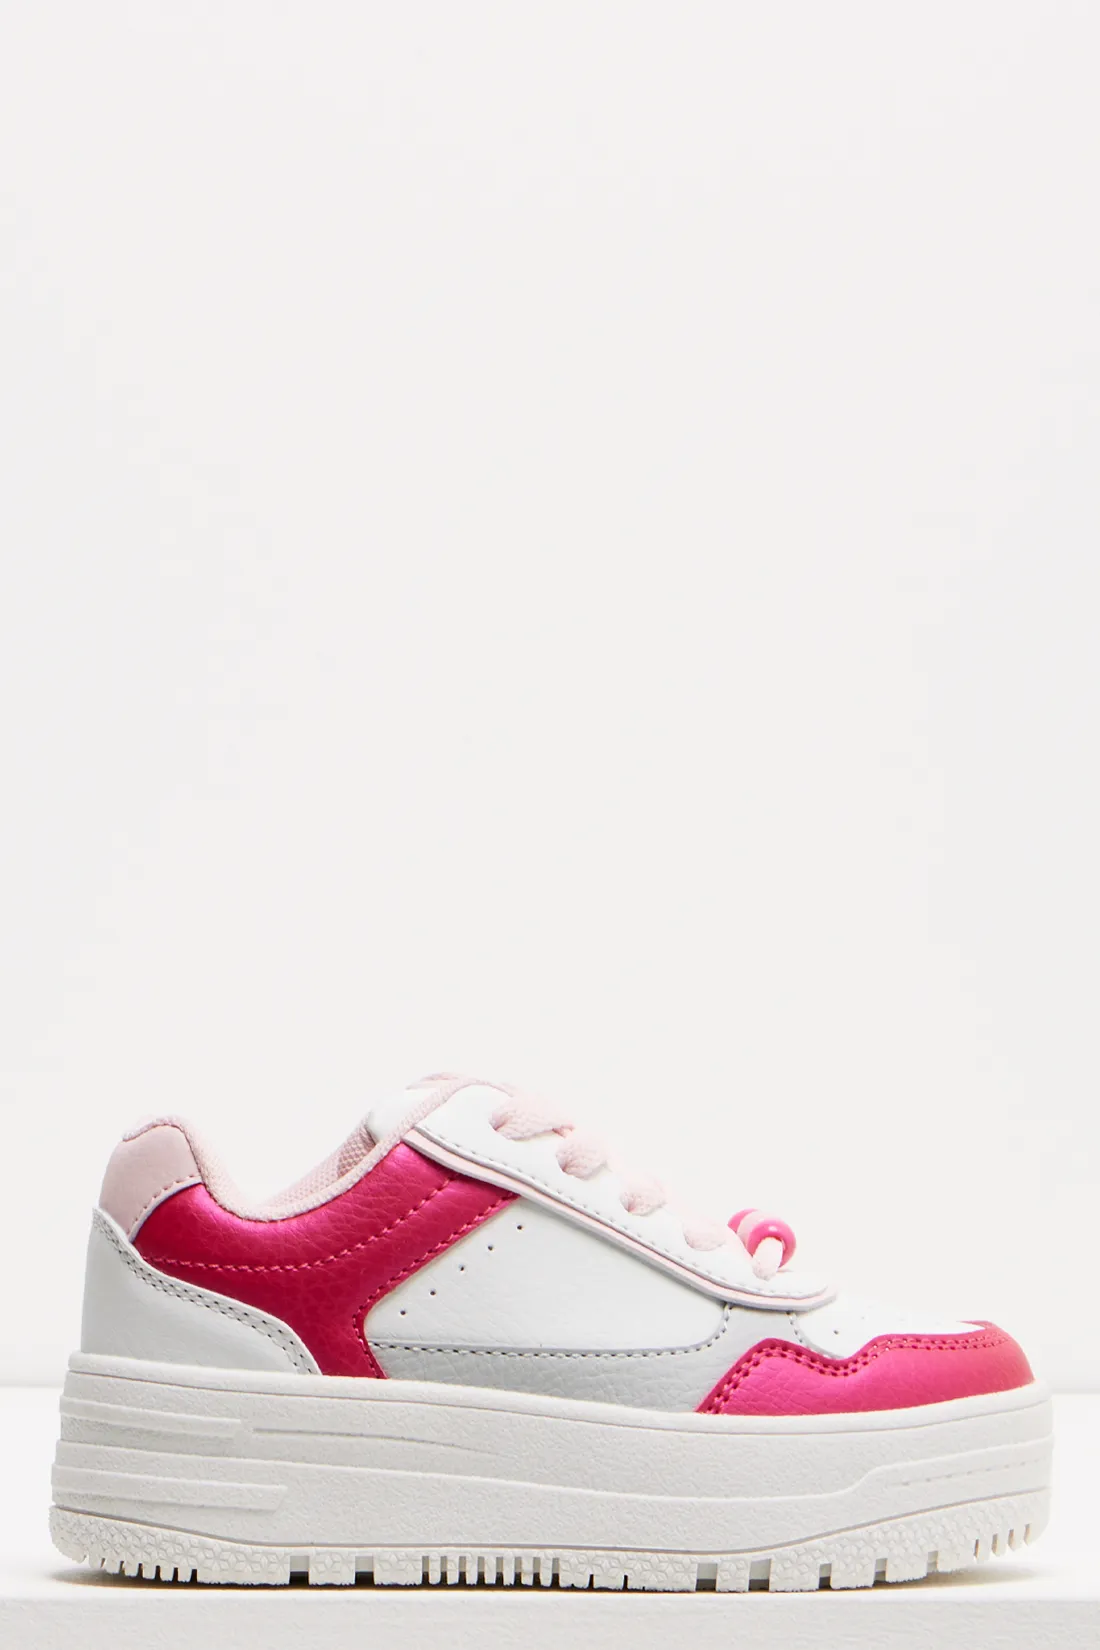 Tonal sneaker white & pink - GIRLS 2-8 YEARS Shoes | Ackermans